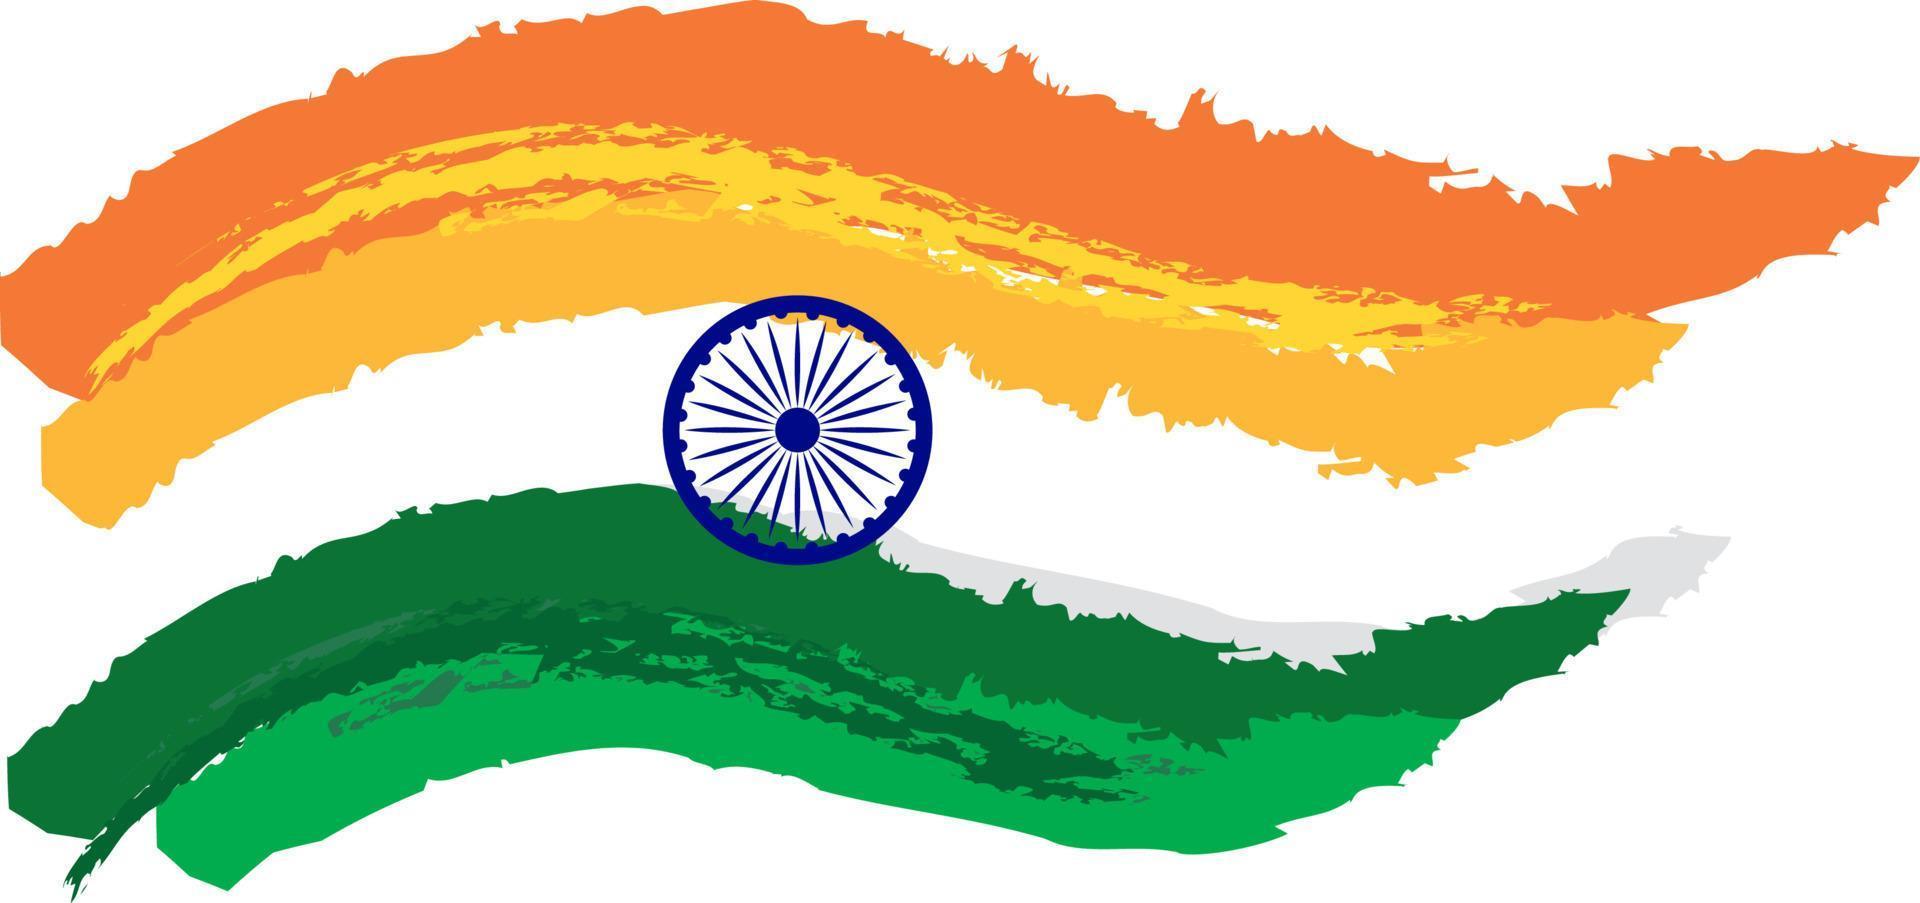 Flag design of India vector